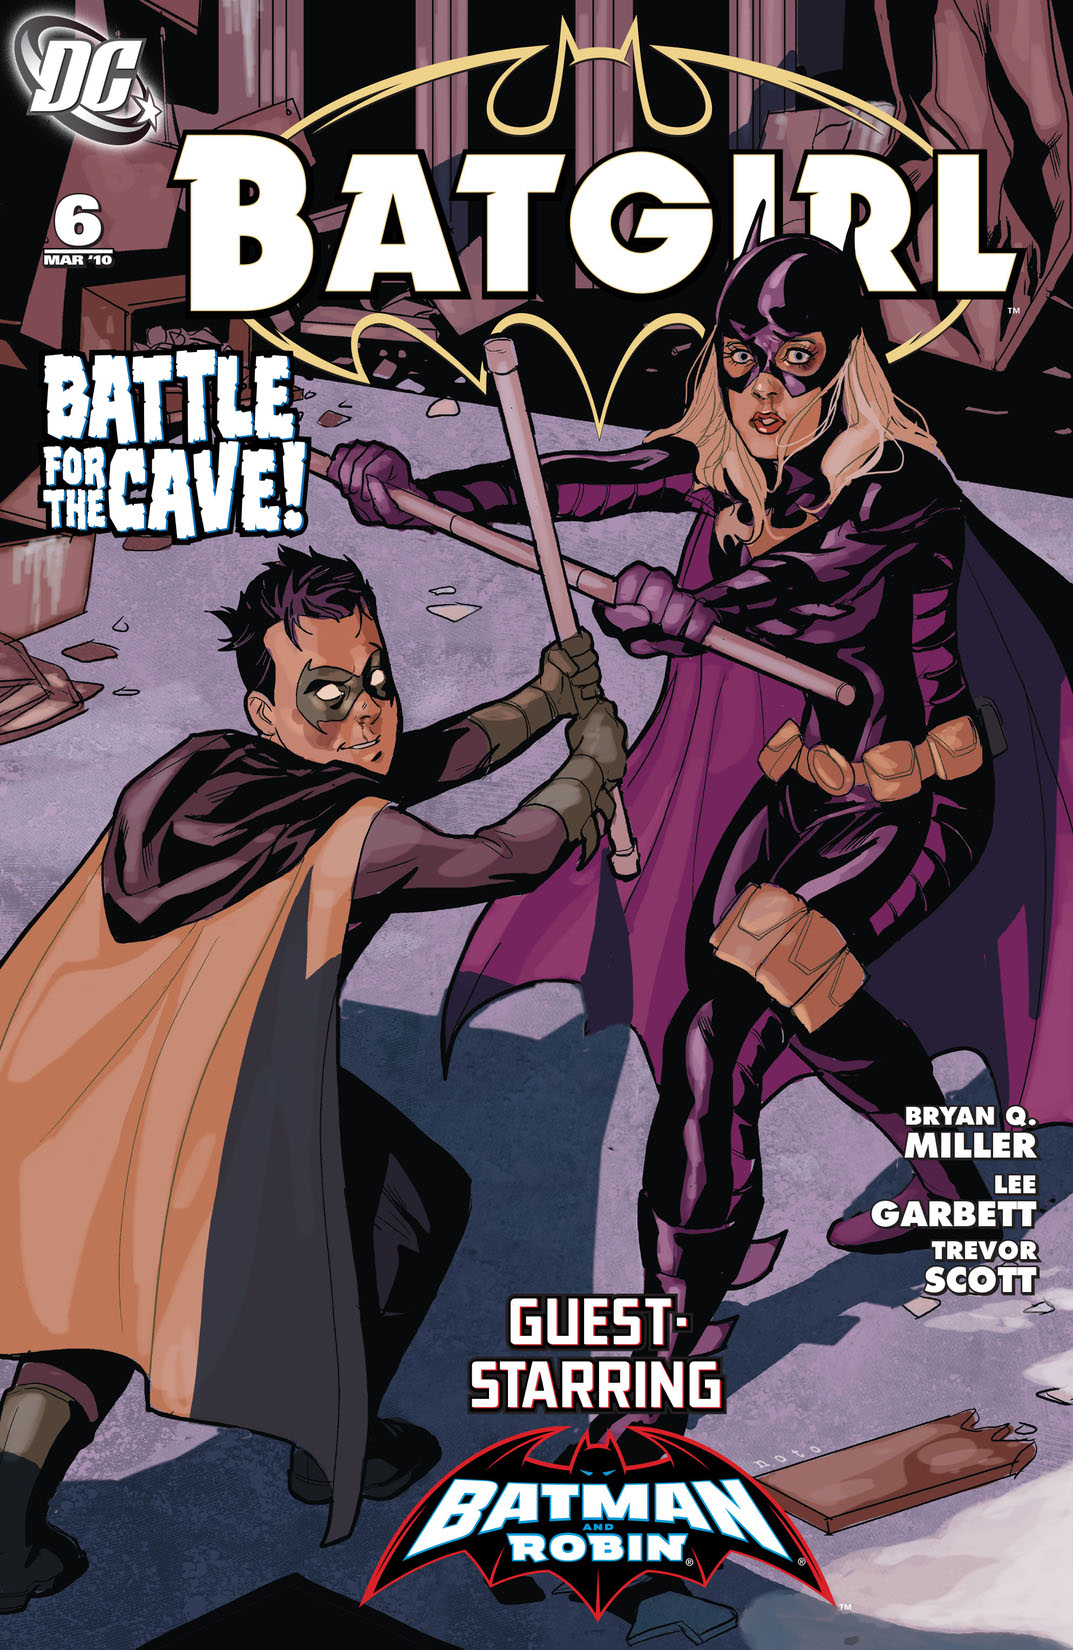 Batgirl (2009-) #6 preview images